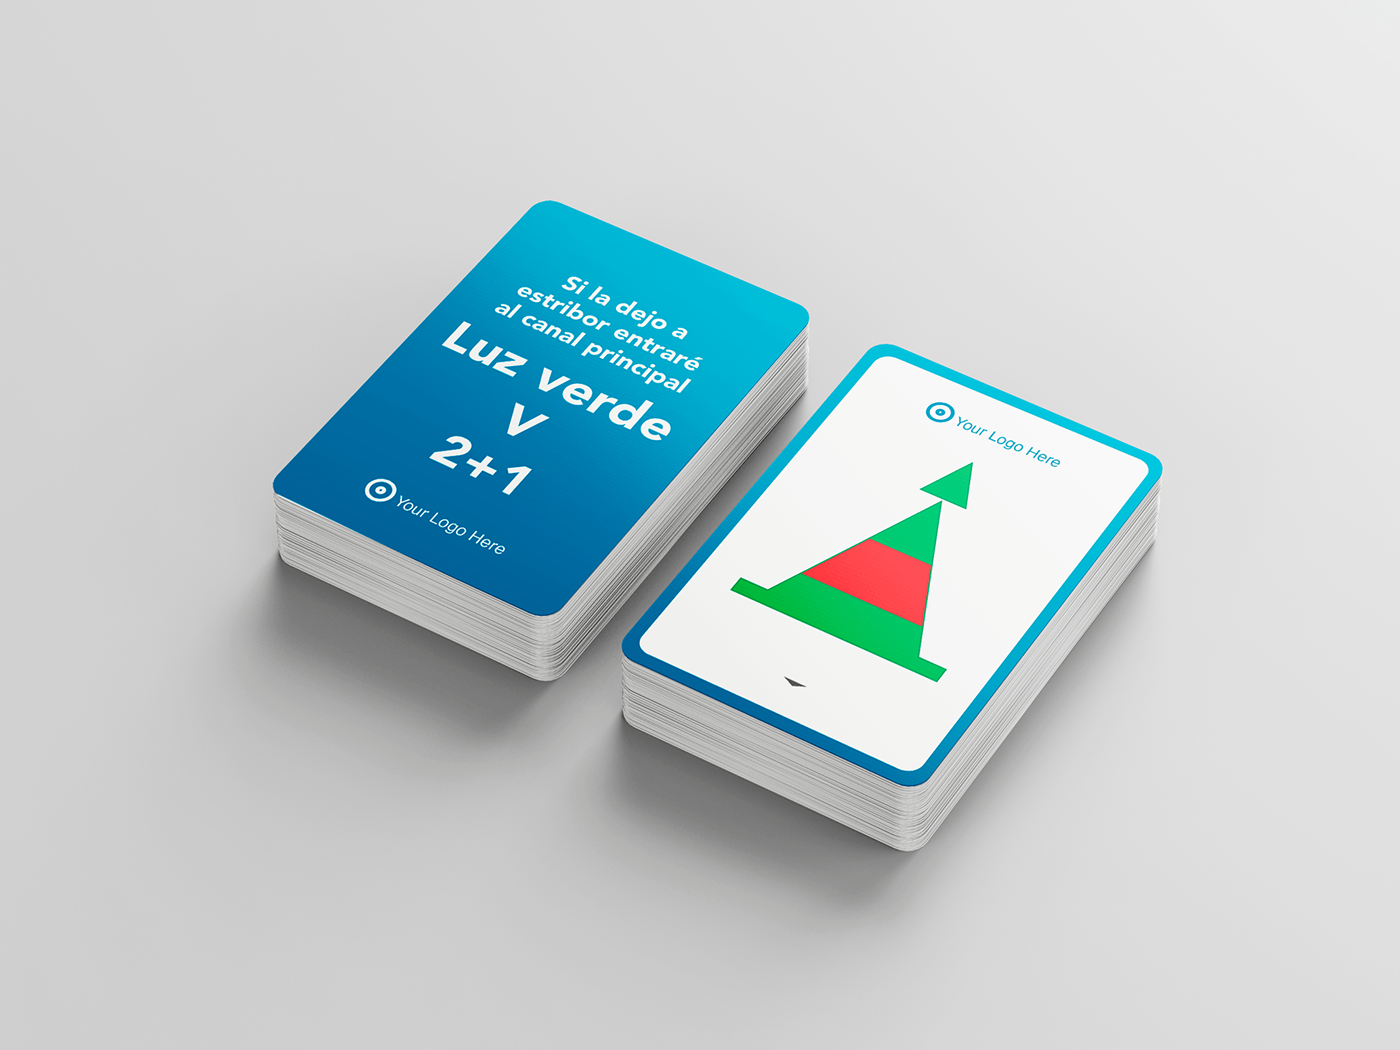 barajas cartas Games juego Nautica navegacion ODIBAZO patrón de navegación PER-CARDS sailing